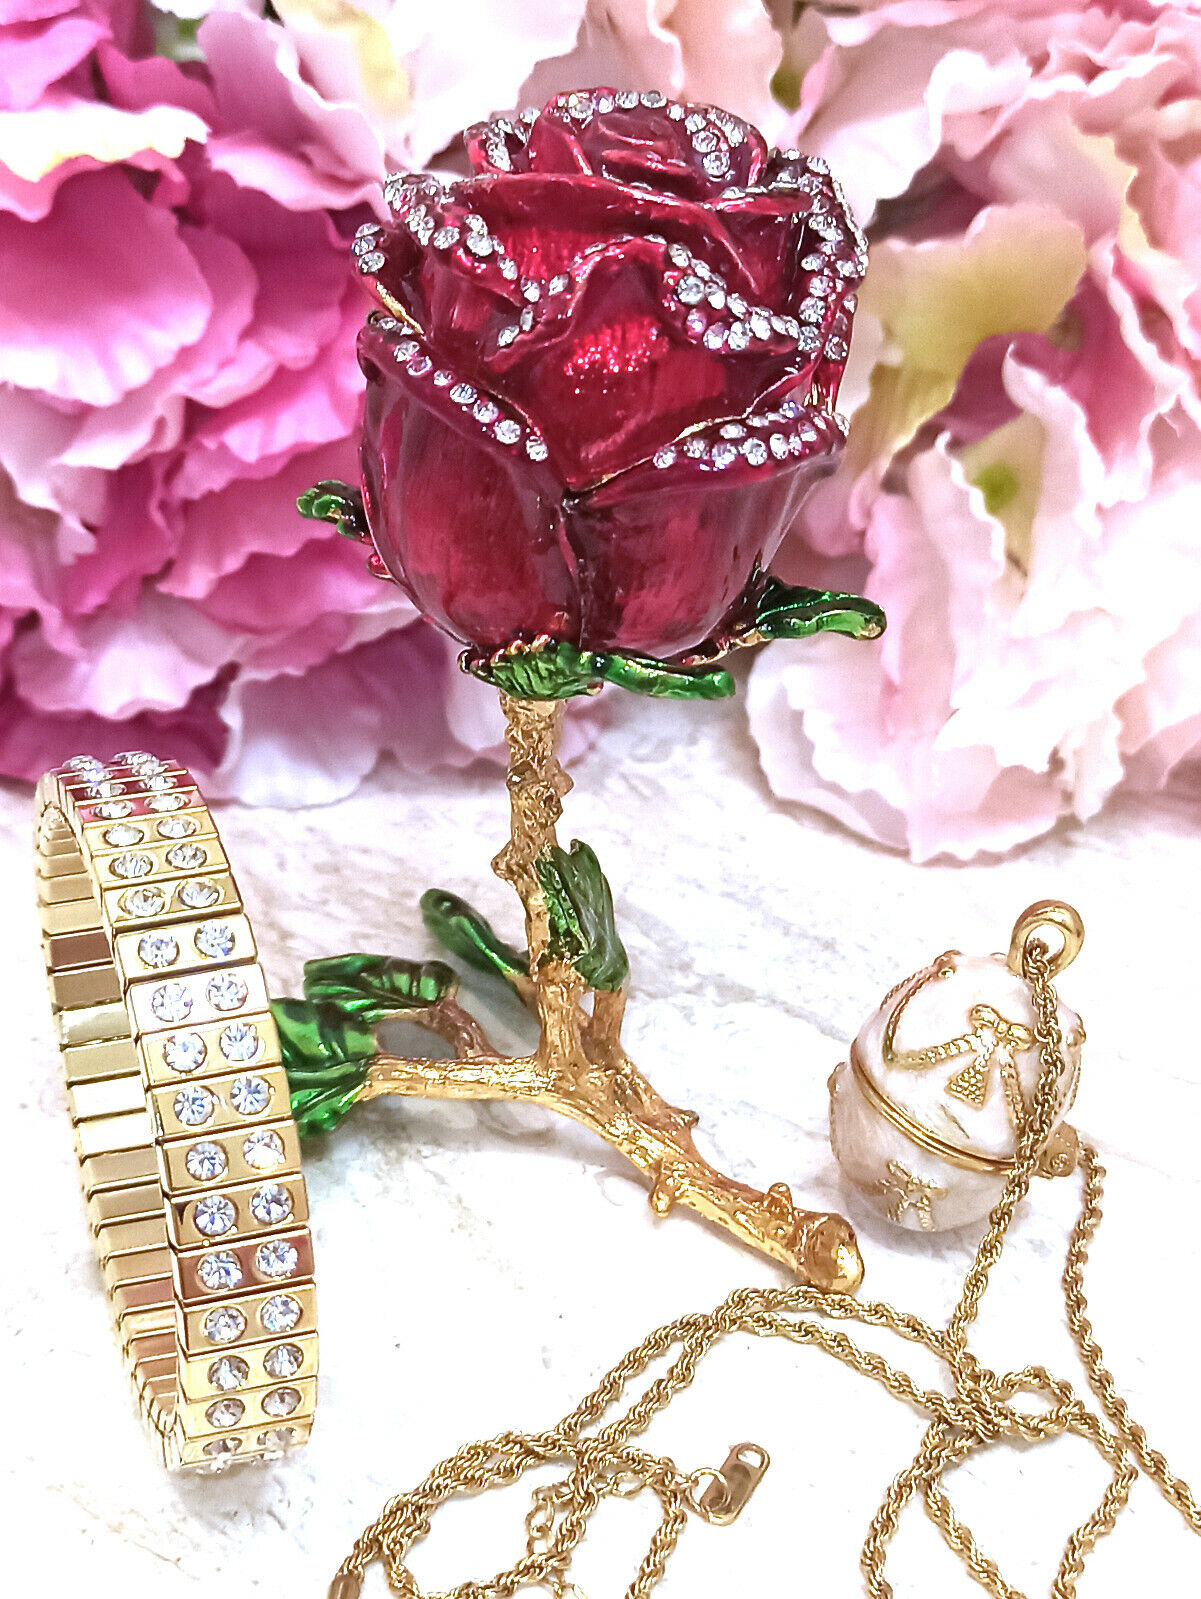 Luxury Valentine present Faberge Egg + Fabergé egg Necklace + Bangle 24k Gold HM